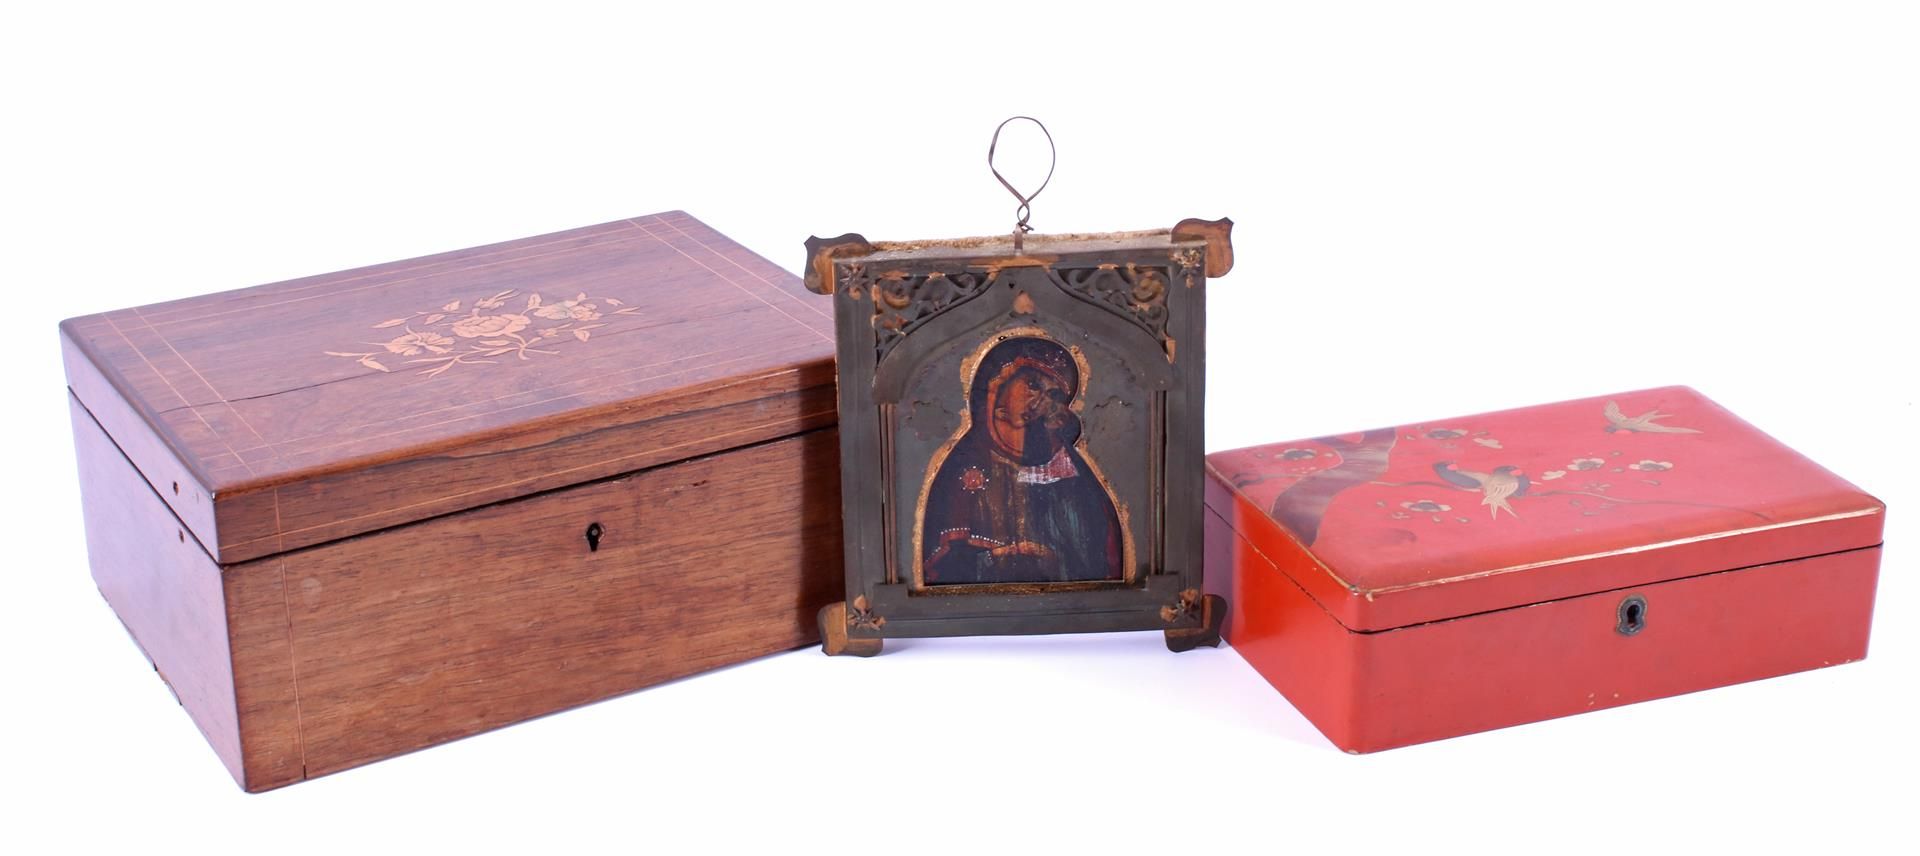 Rosewood veneer & nbsp; wooden box with intarsia 13 cm high, 30x22 cm, Oriental lacquer & nbsp;